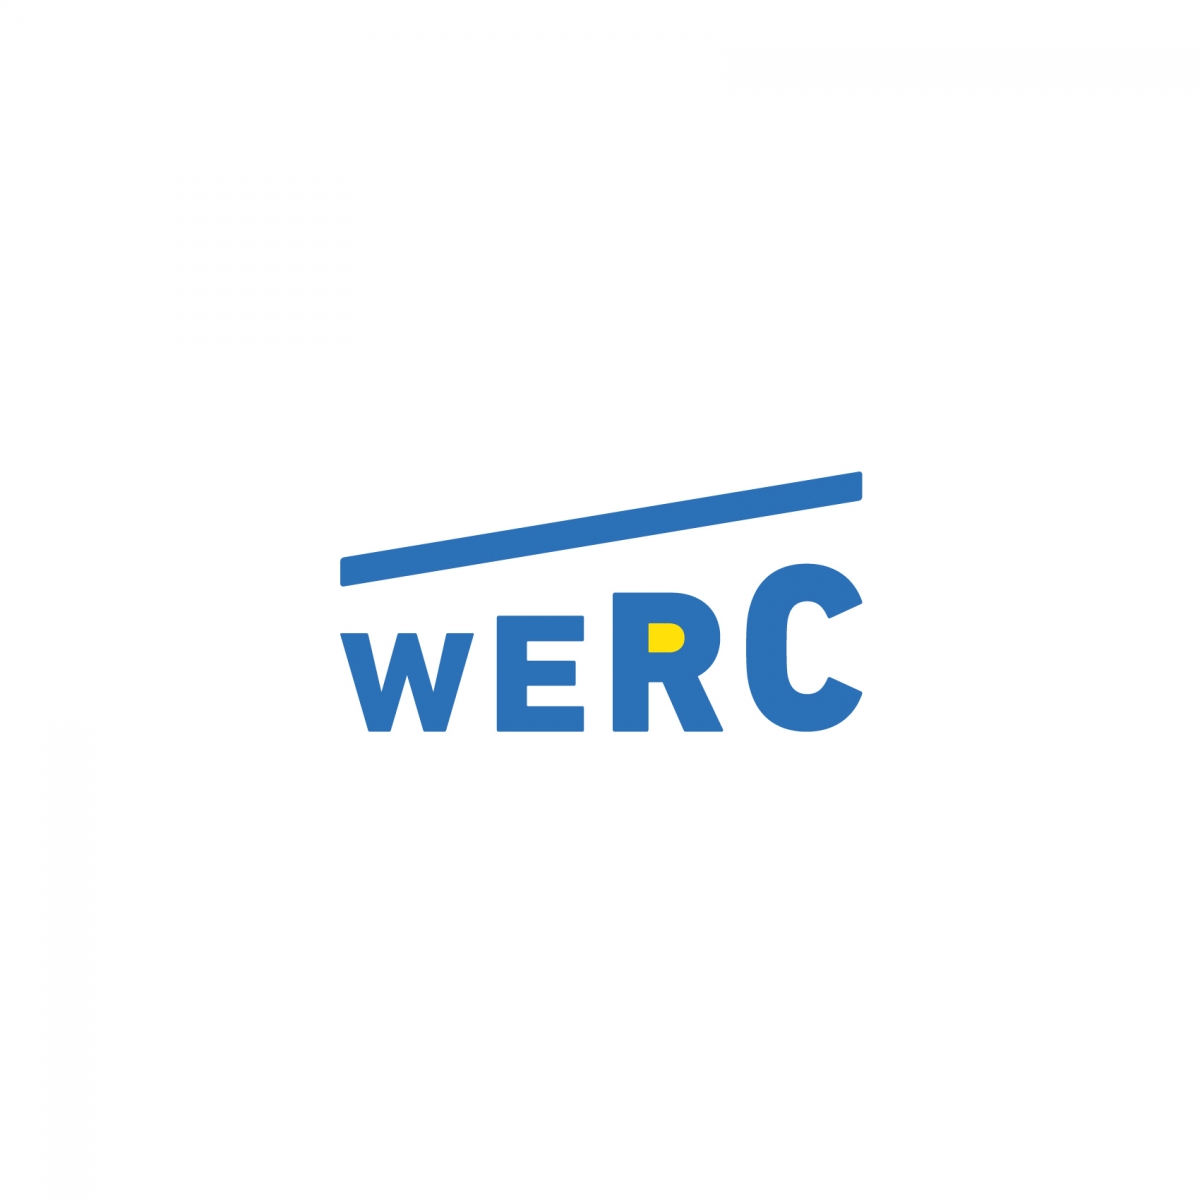 WERC｜CIロゴデザイン グラフィックデザイン ブランドデザイン